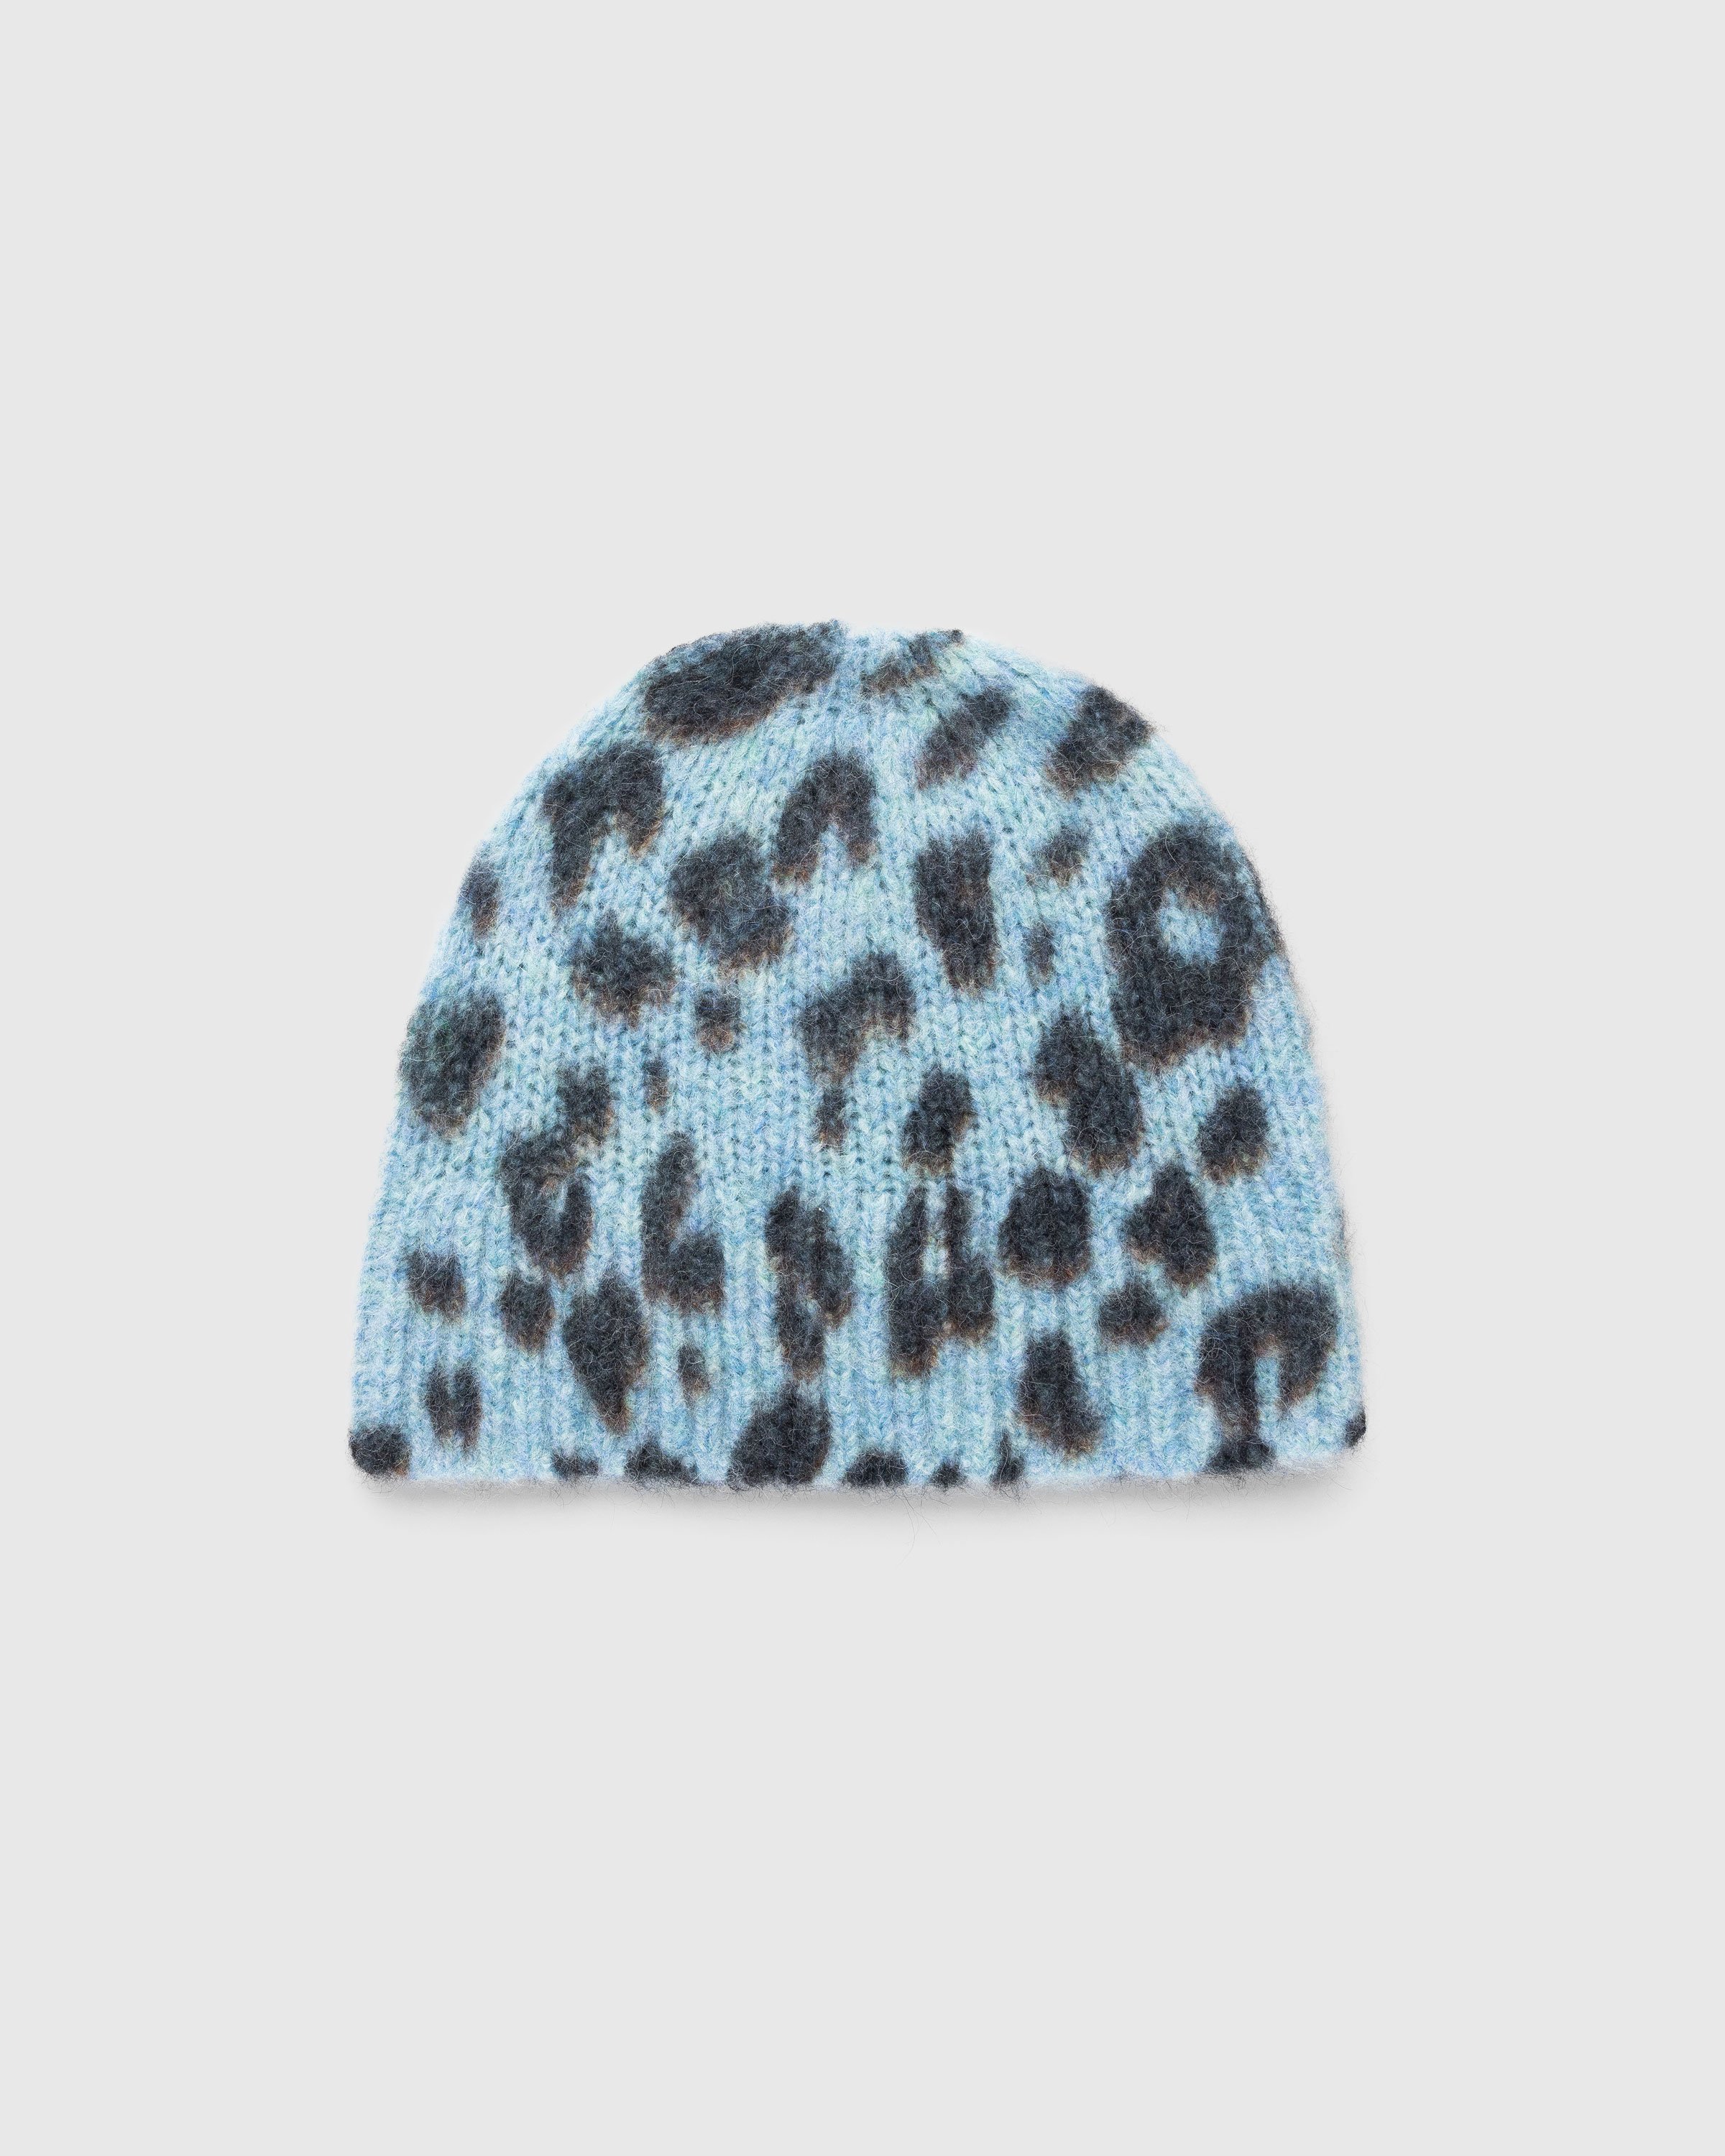 Dries van Noten - Moss Knit Hat Blue - Accessories - Blue - Image 1